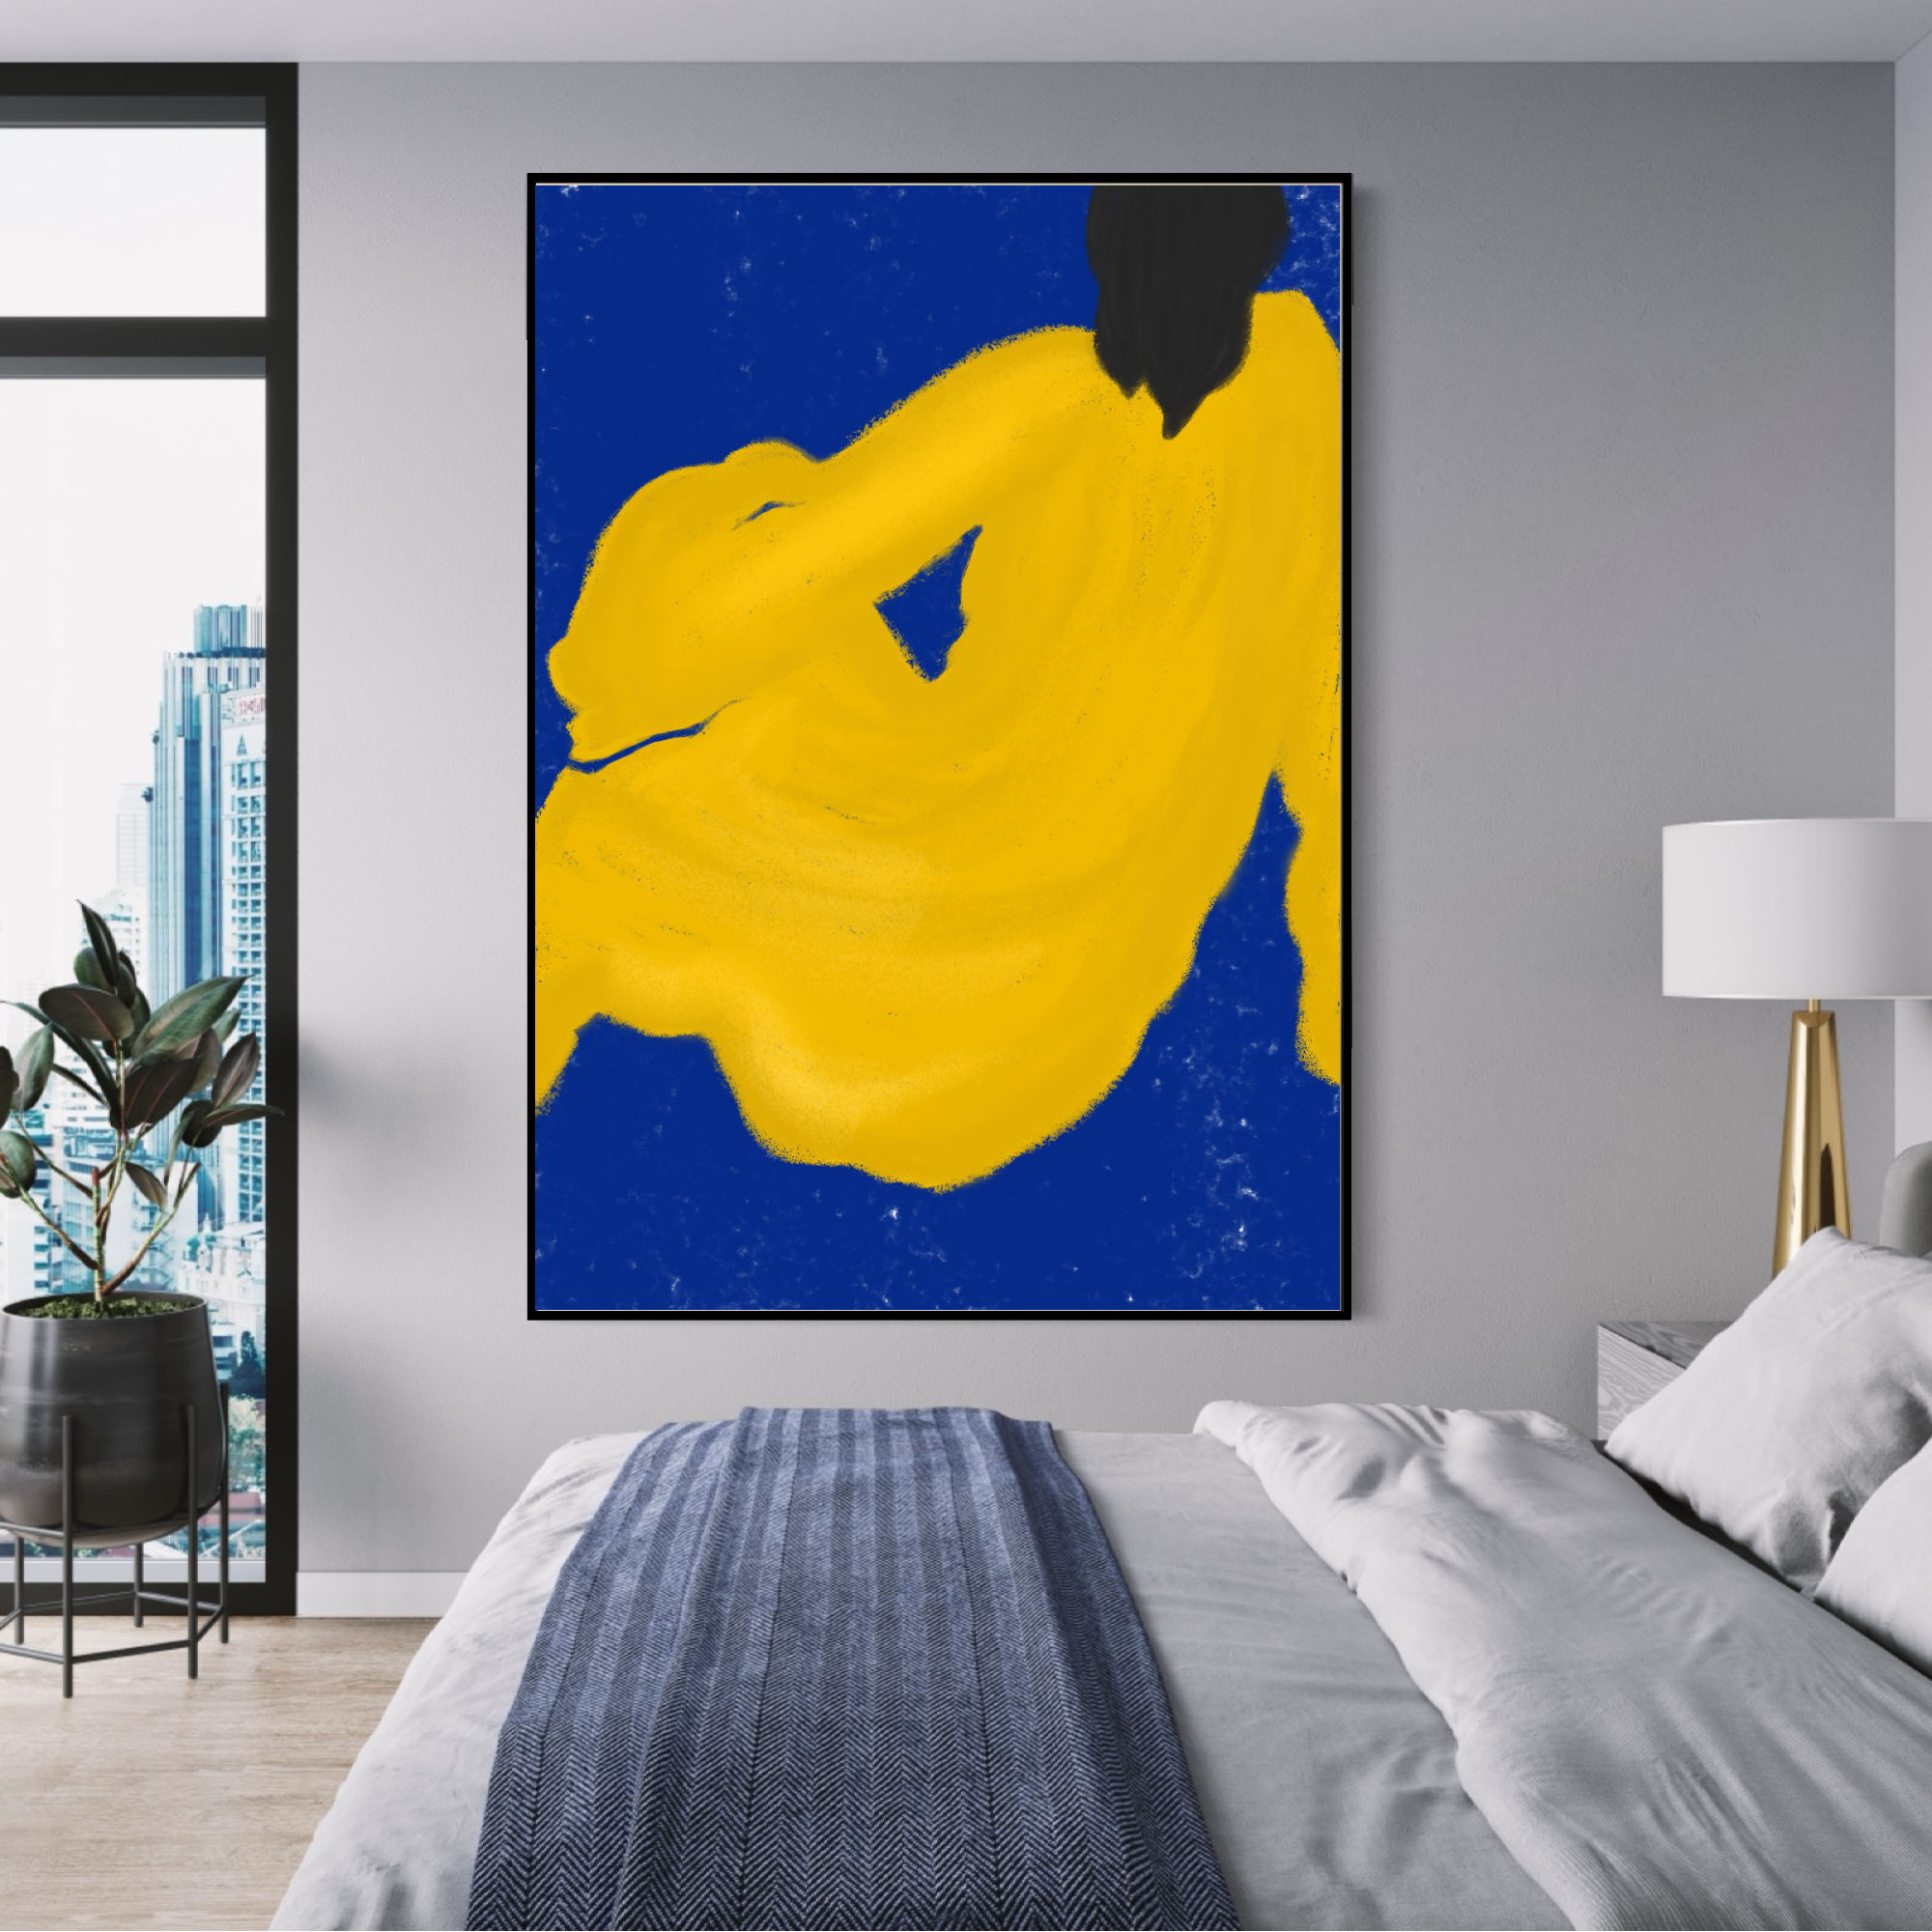 Poster: "Yellow Woman"